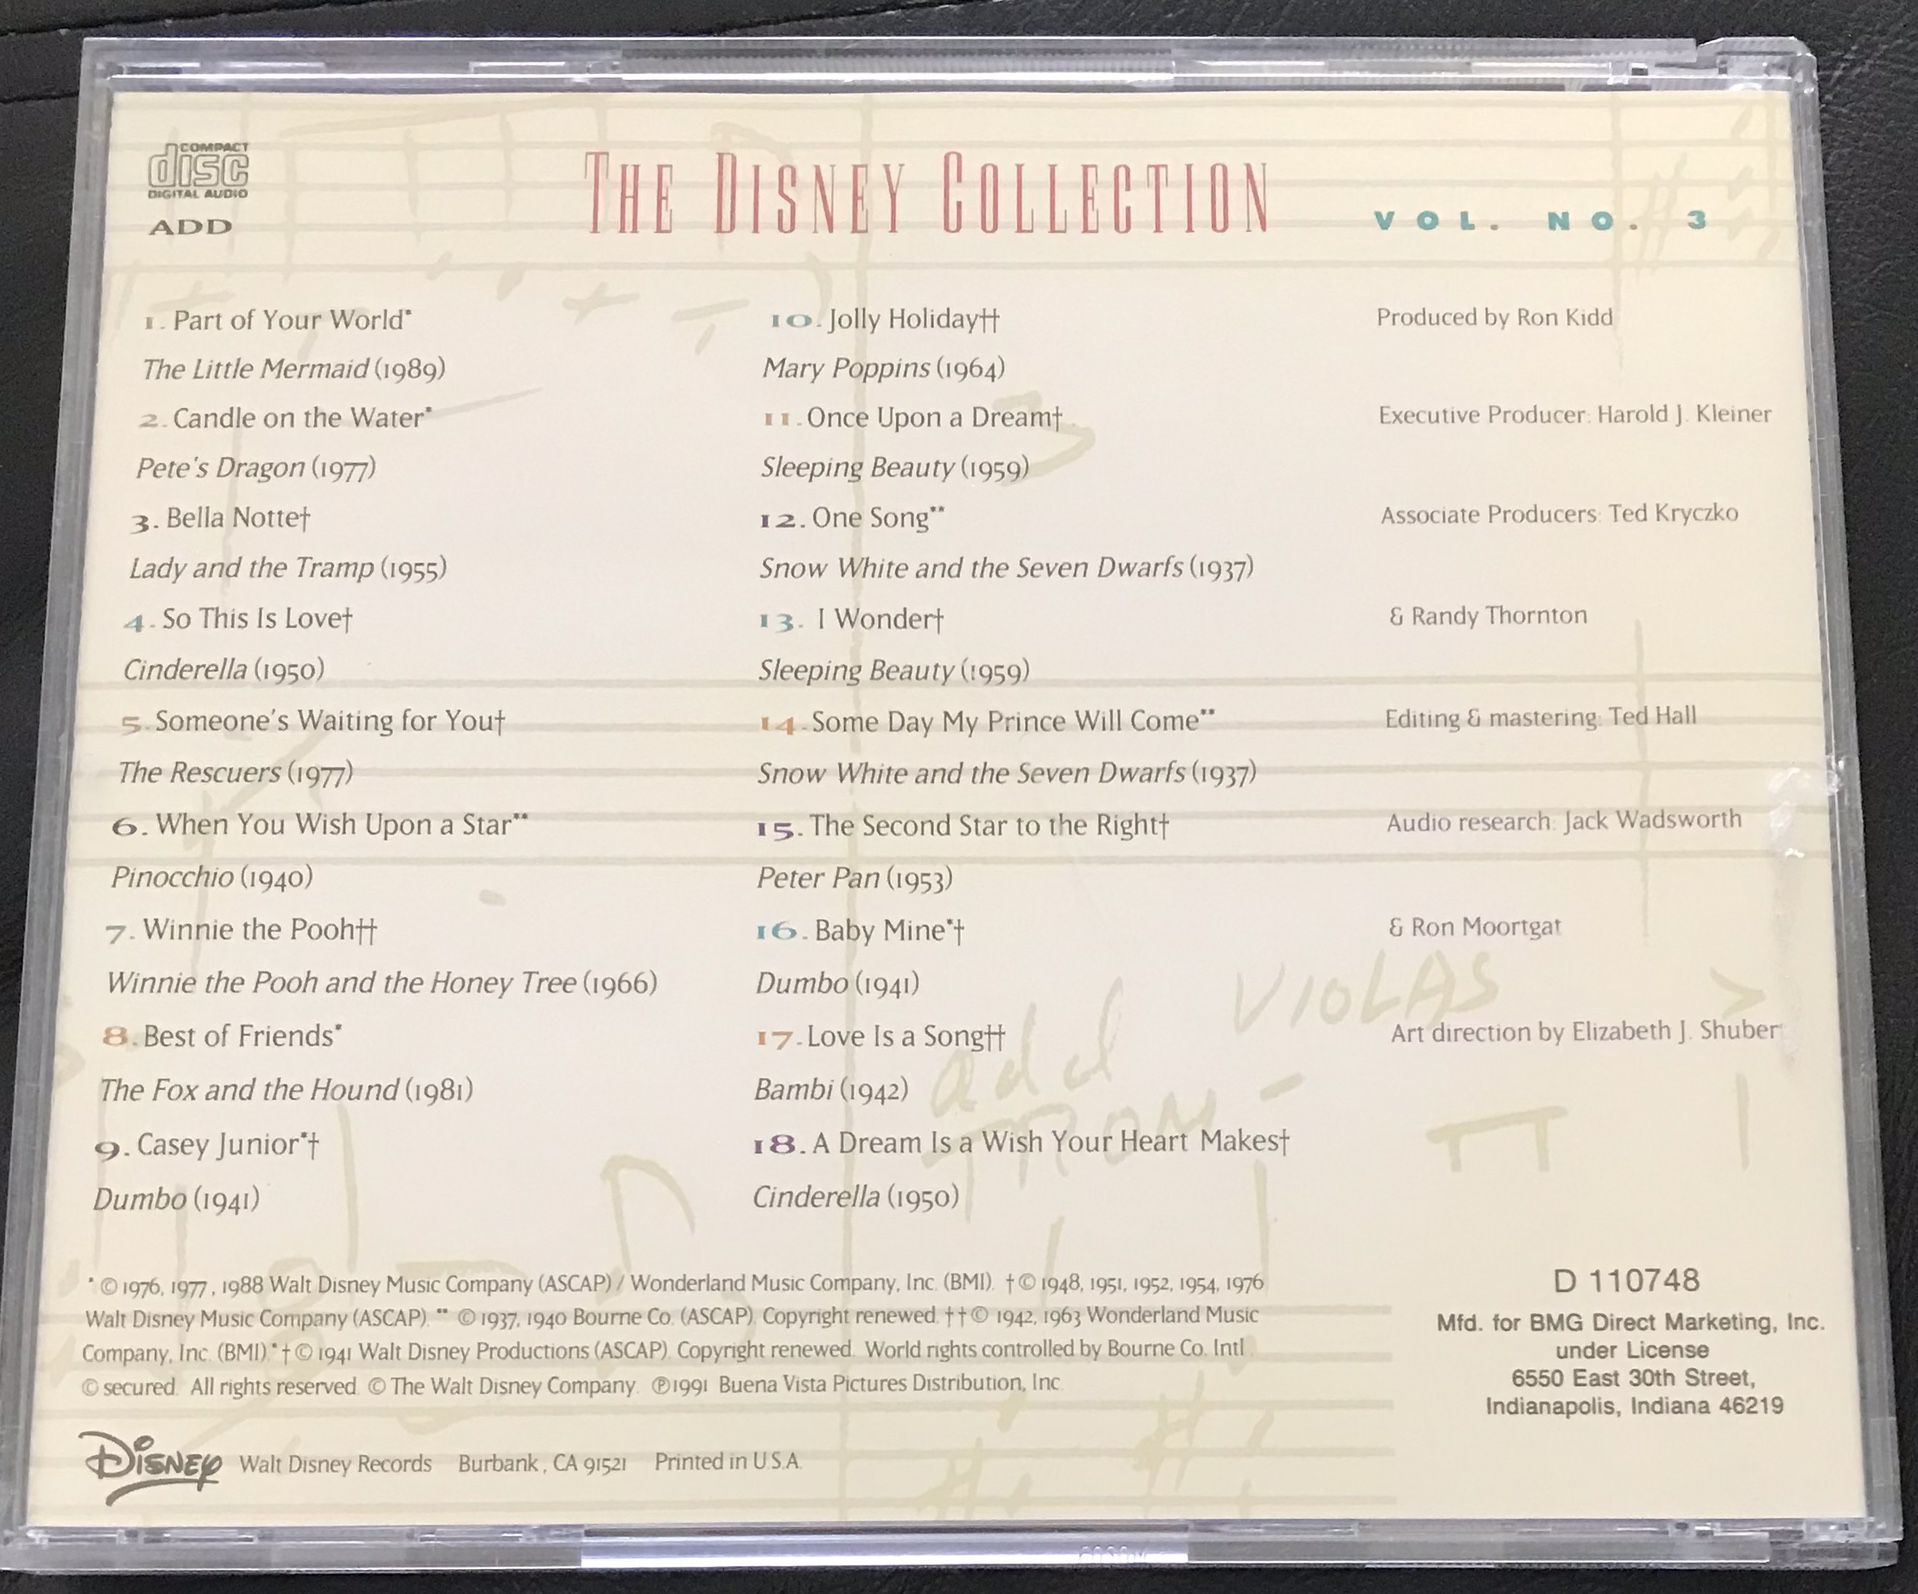 The Disney Collection Vol. No. 3 CD